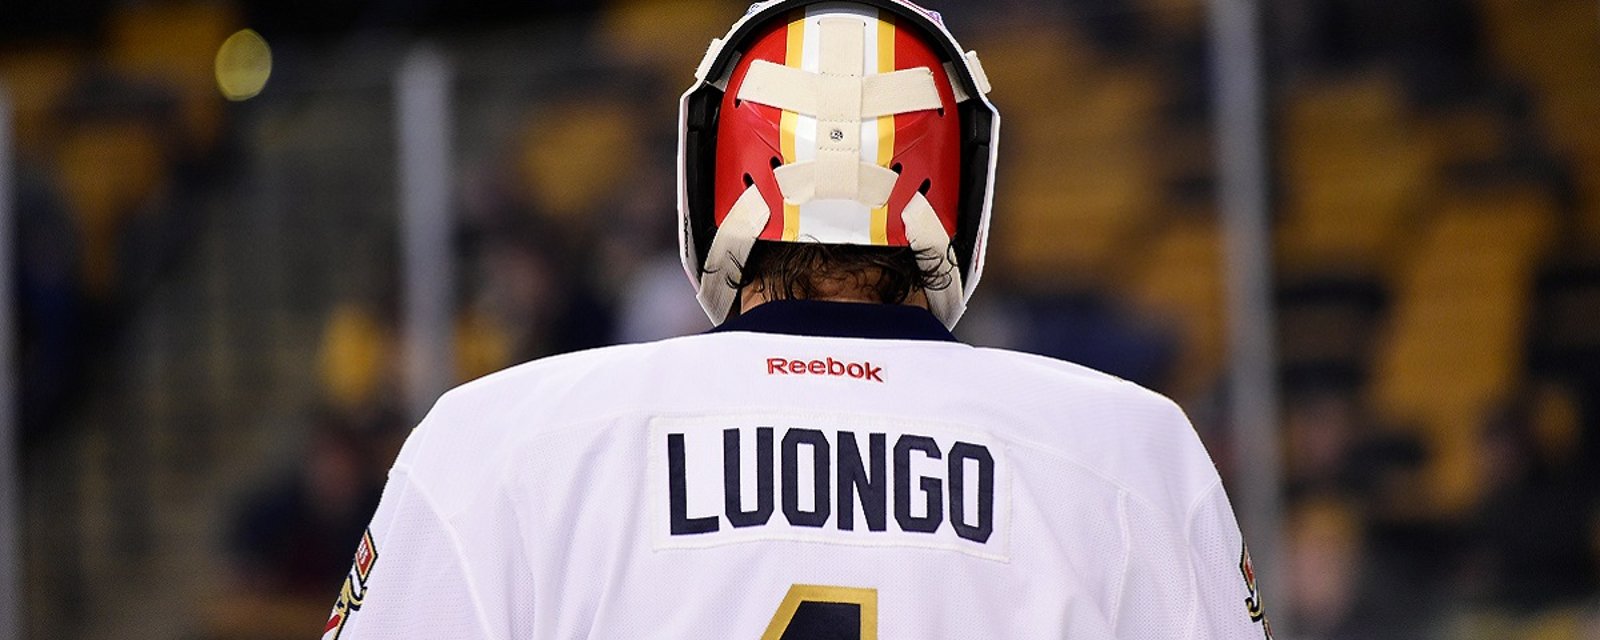 Breaking: Huge update on Luongo following season-ending injury.